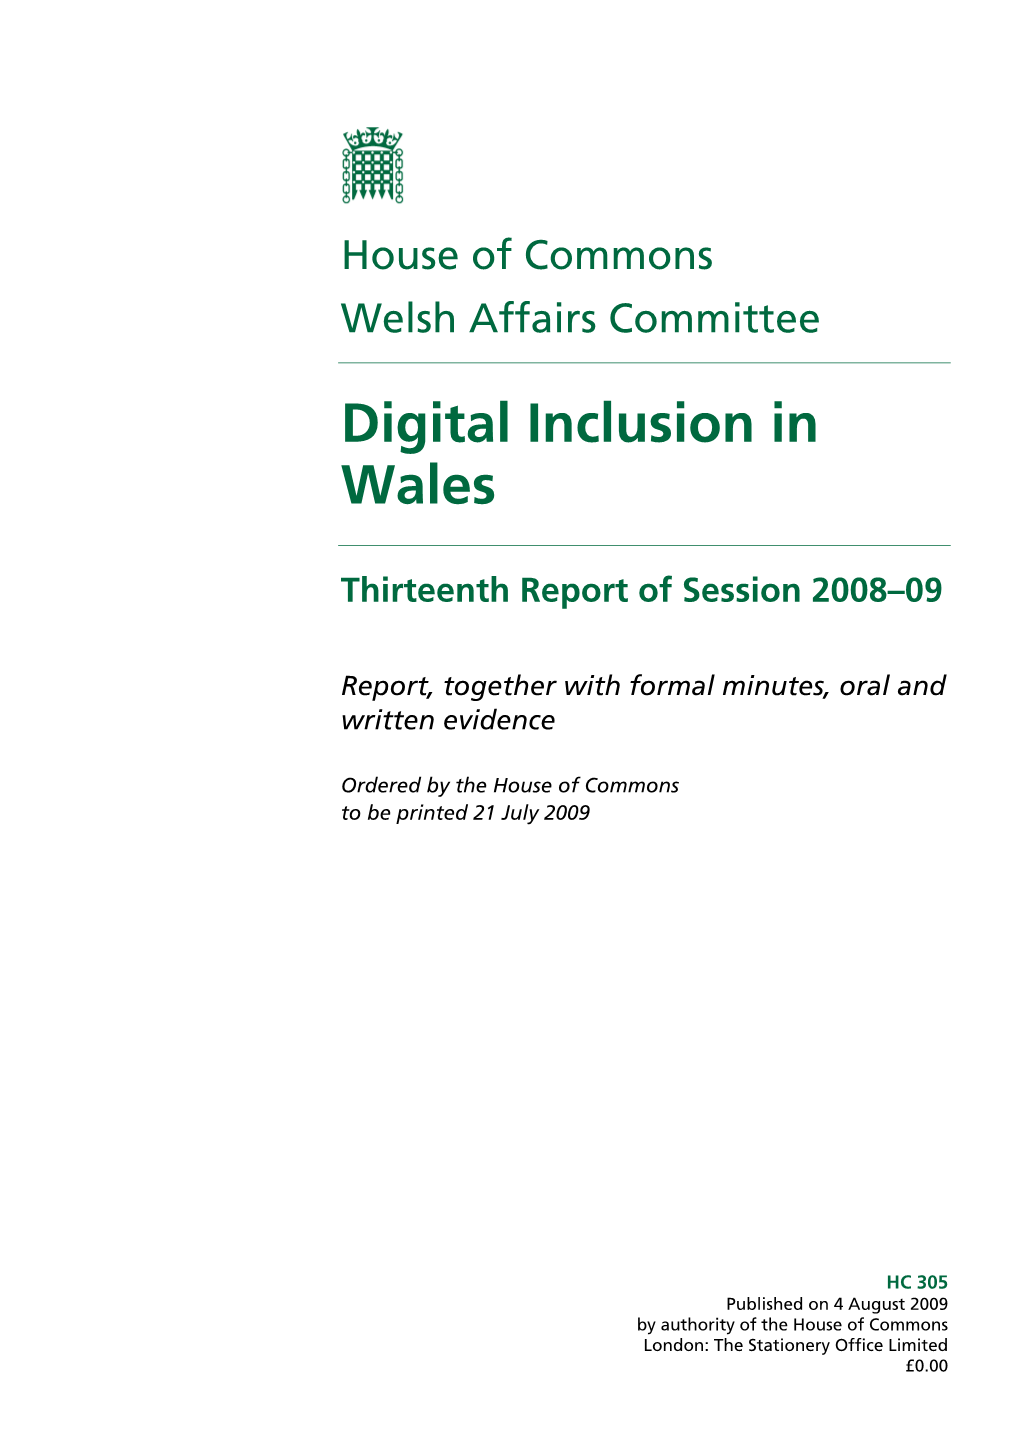 Digital Inclusion in Wales